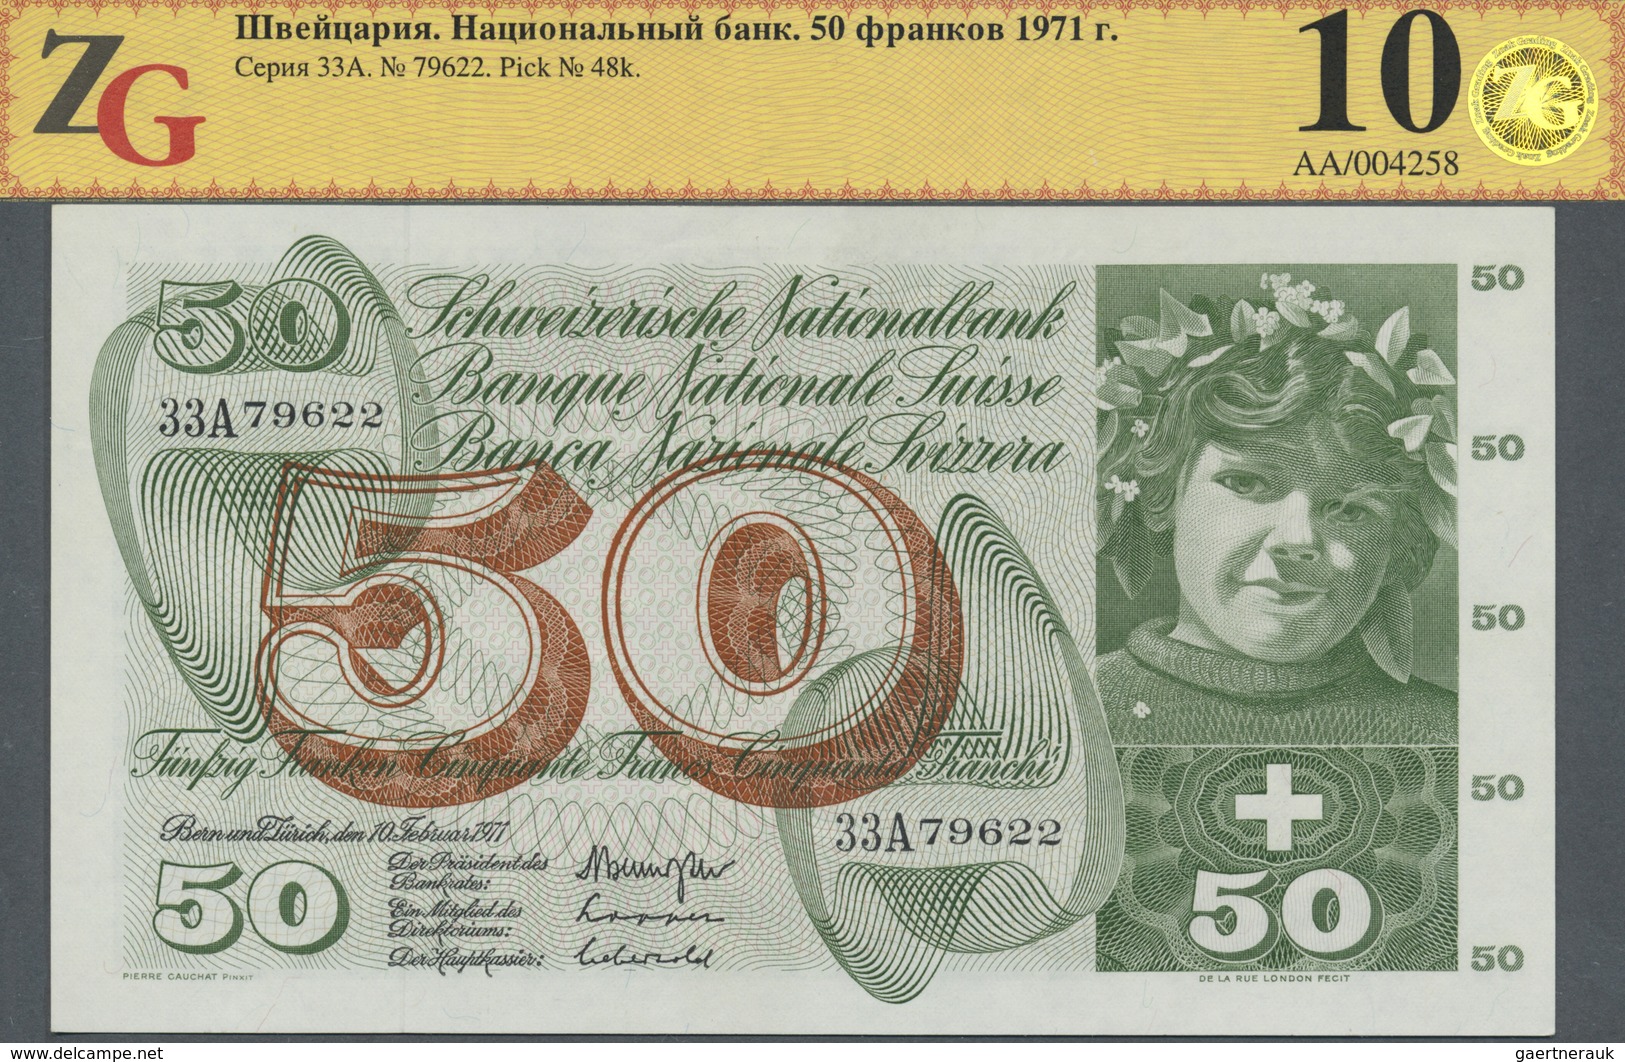 Switzerland / Schweiz: 50 Franken 1971, P.48k In Perfect Condition, ZG Graded 60 Unc - Switzerland